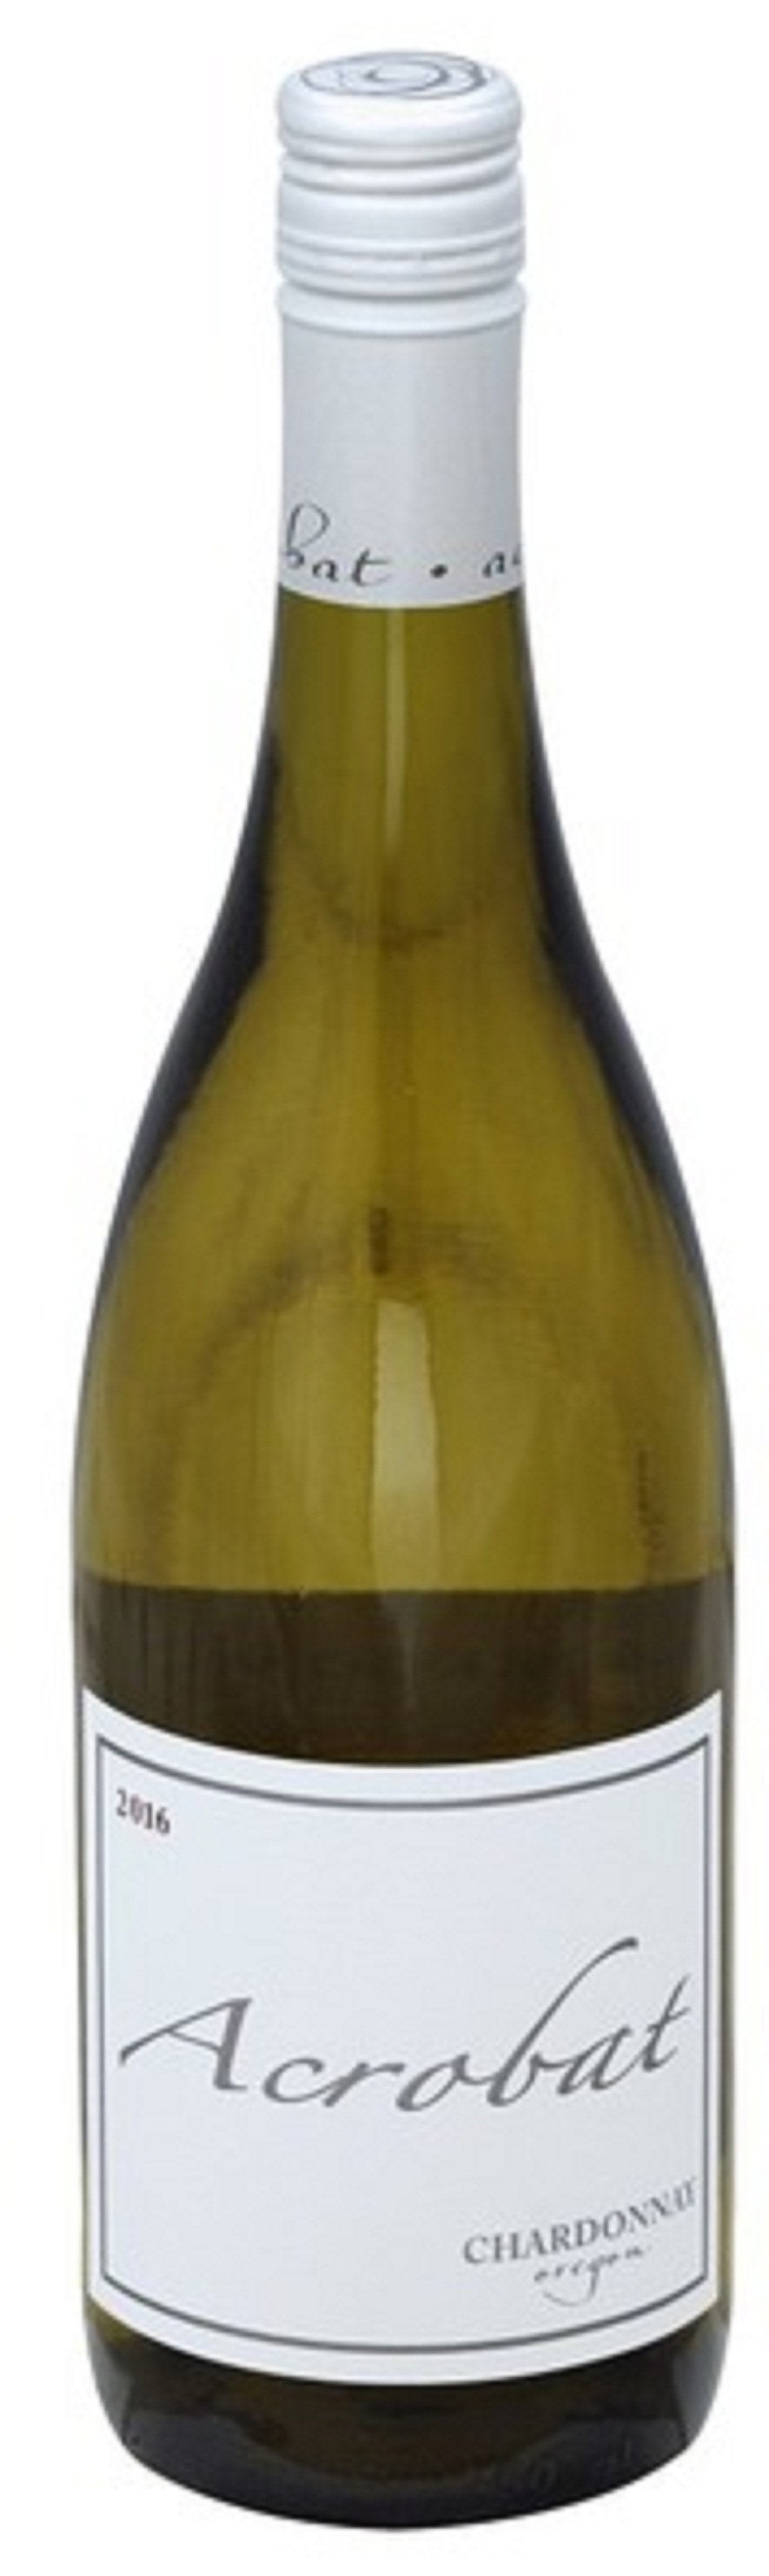 Acrobat Chardonnay 2016